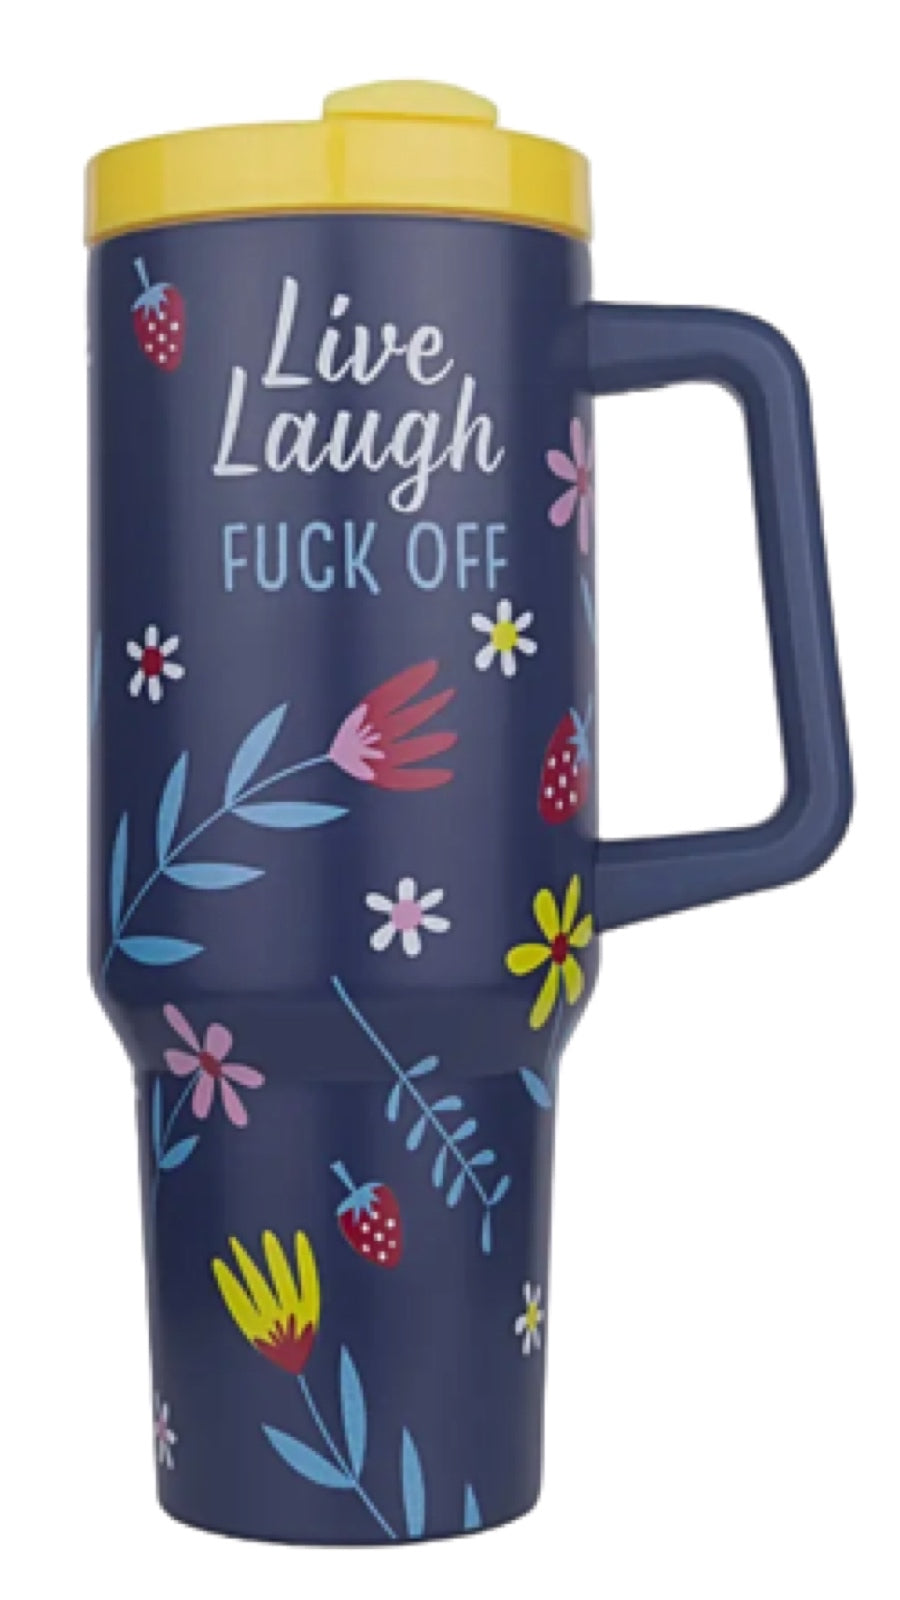 Fuck Off 11oz Coffee Mug - Funny Novelty Souvenir